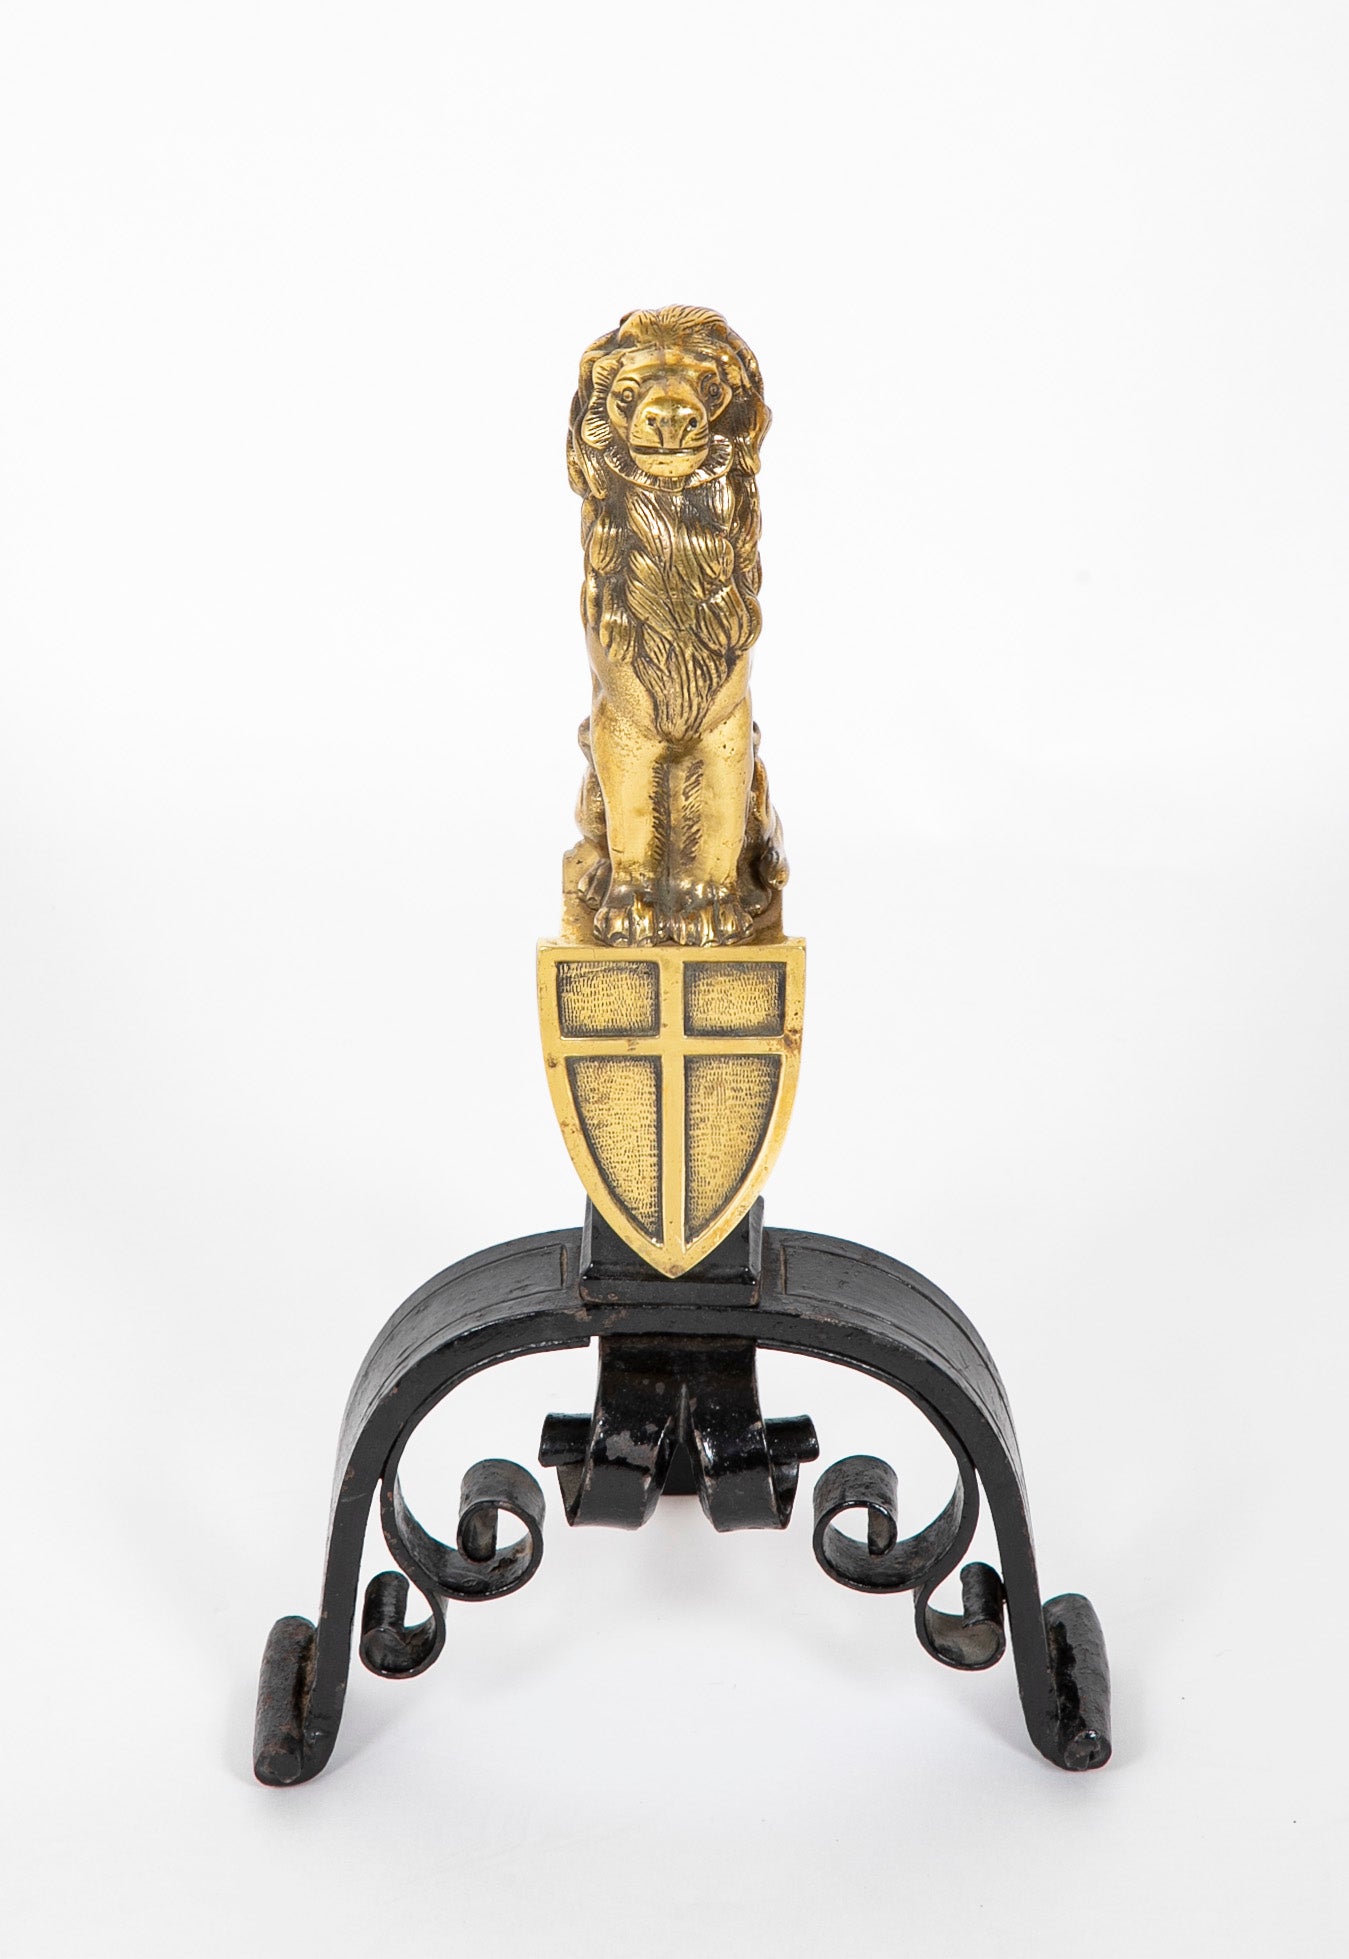 A Pair of 19th Century English Gilt Brass & Iron Andirons